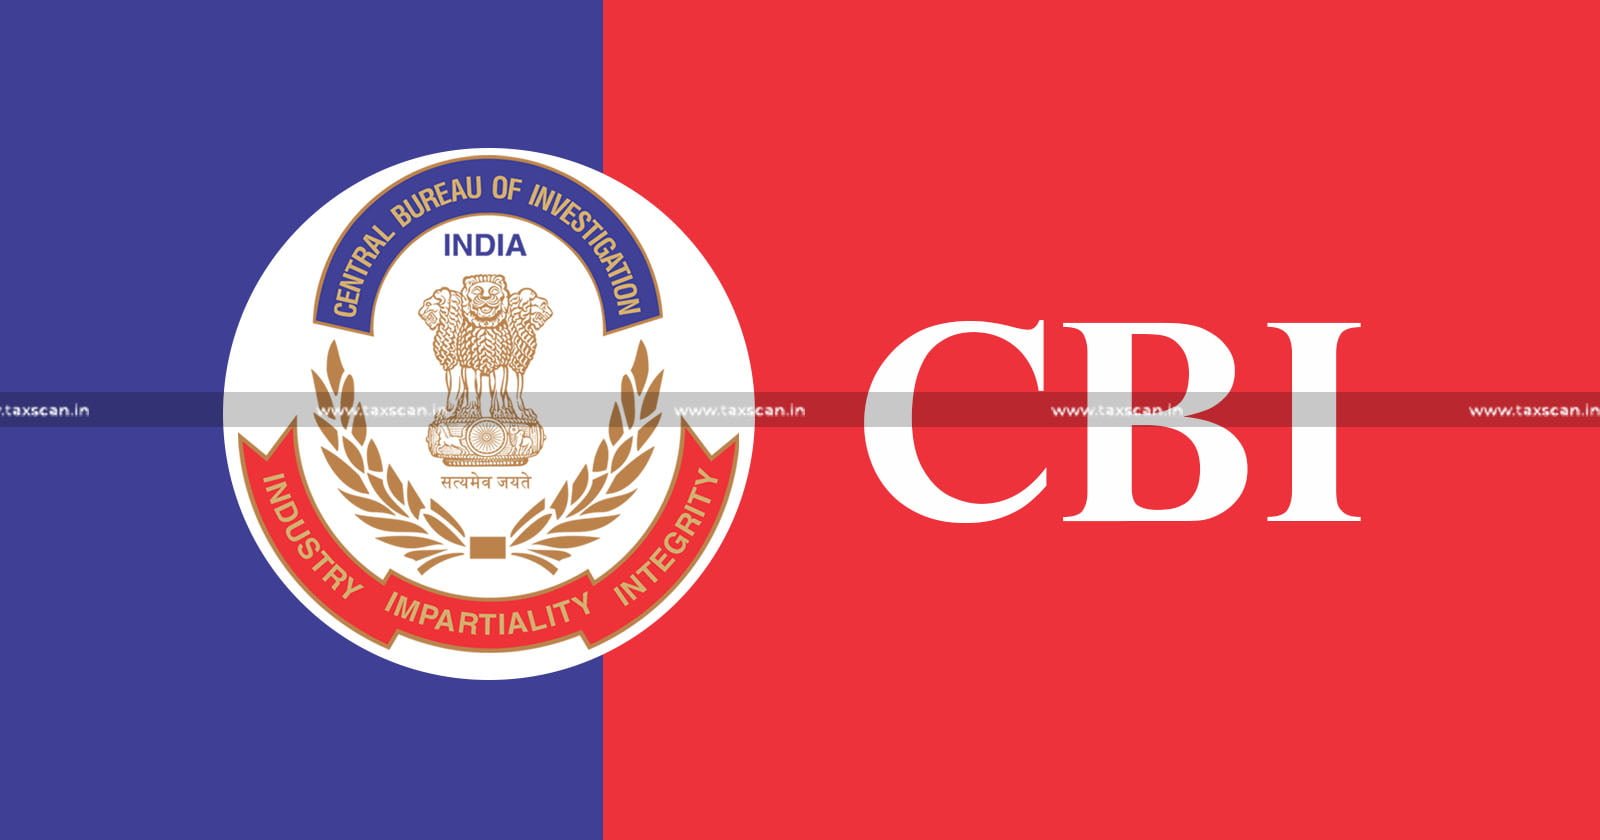 CBI logo, Vector Logo of CBI brand free download (eps, ai, png, cdr) formats-cheohanoi.vn